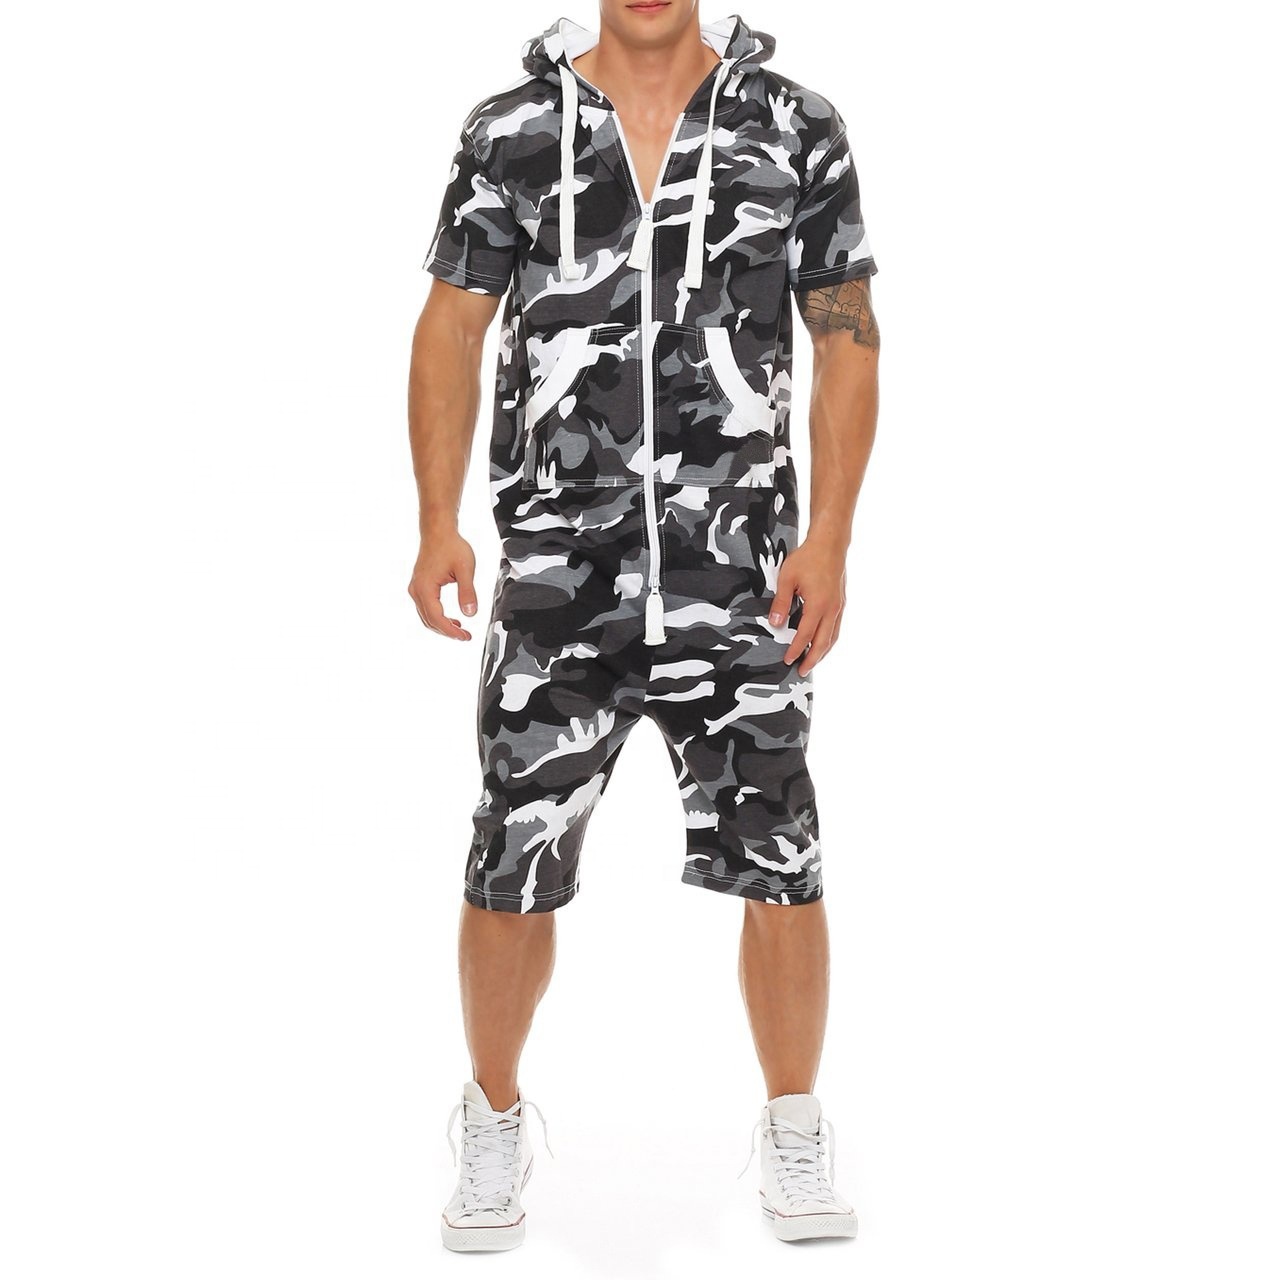 Fashion Men's Tracksuit Set Camouflage Zipper Hooded Jogging Sets Poly Cotton T-shirts & Shorts 2 pcs suits